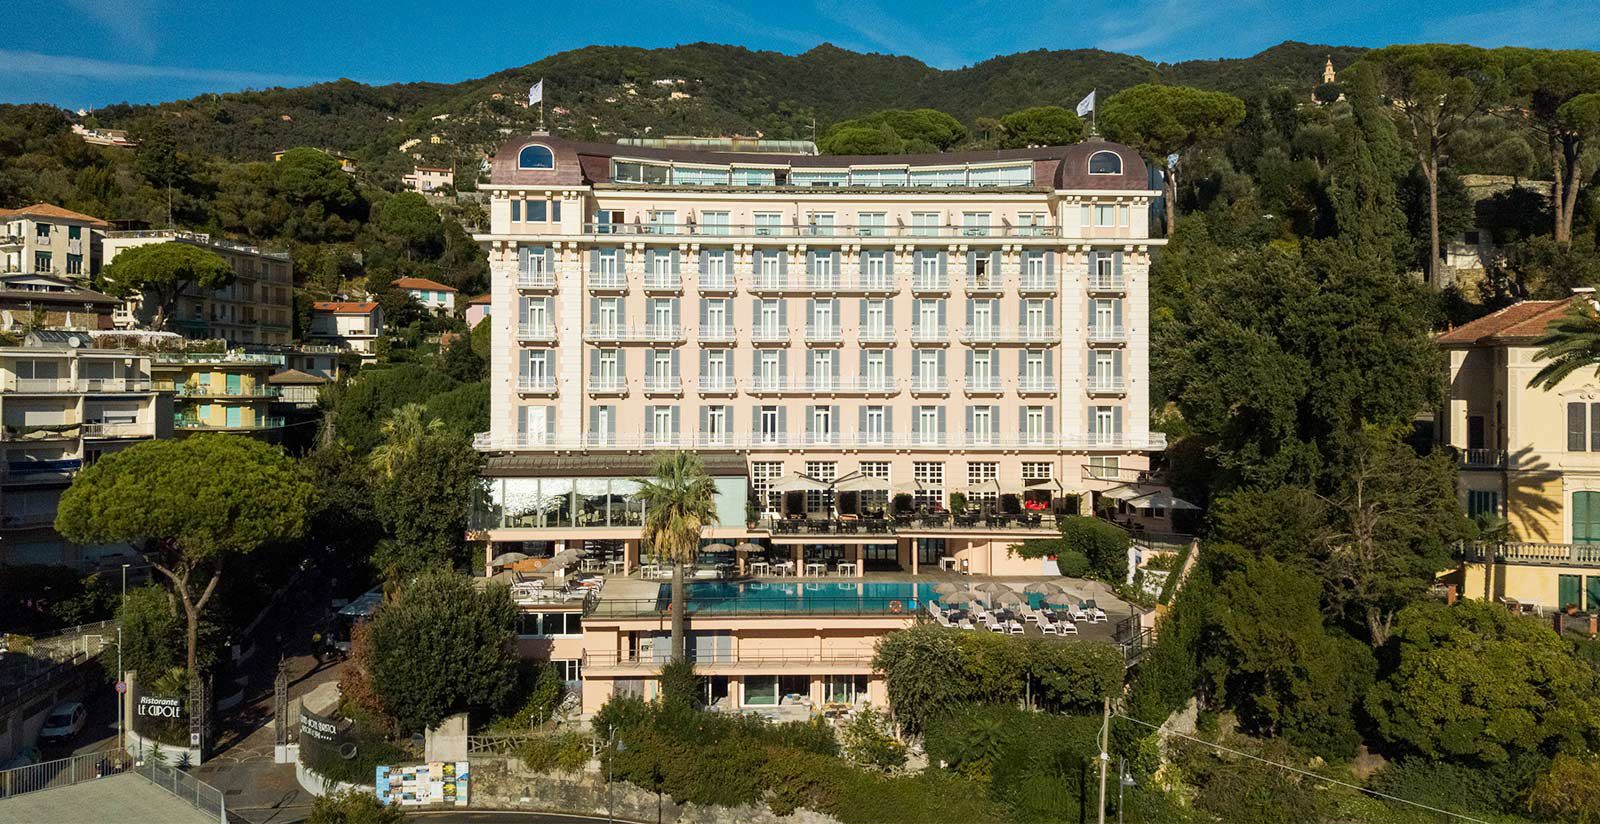 Grand Hotel Bristol - Luxury hotel near Santa Margherita Ligure 5